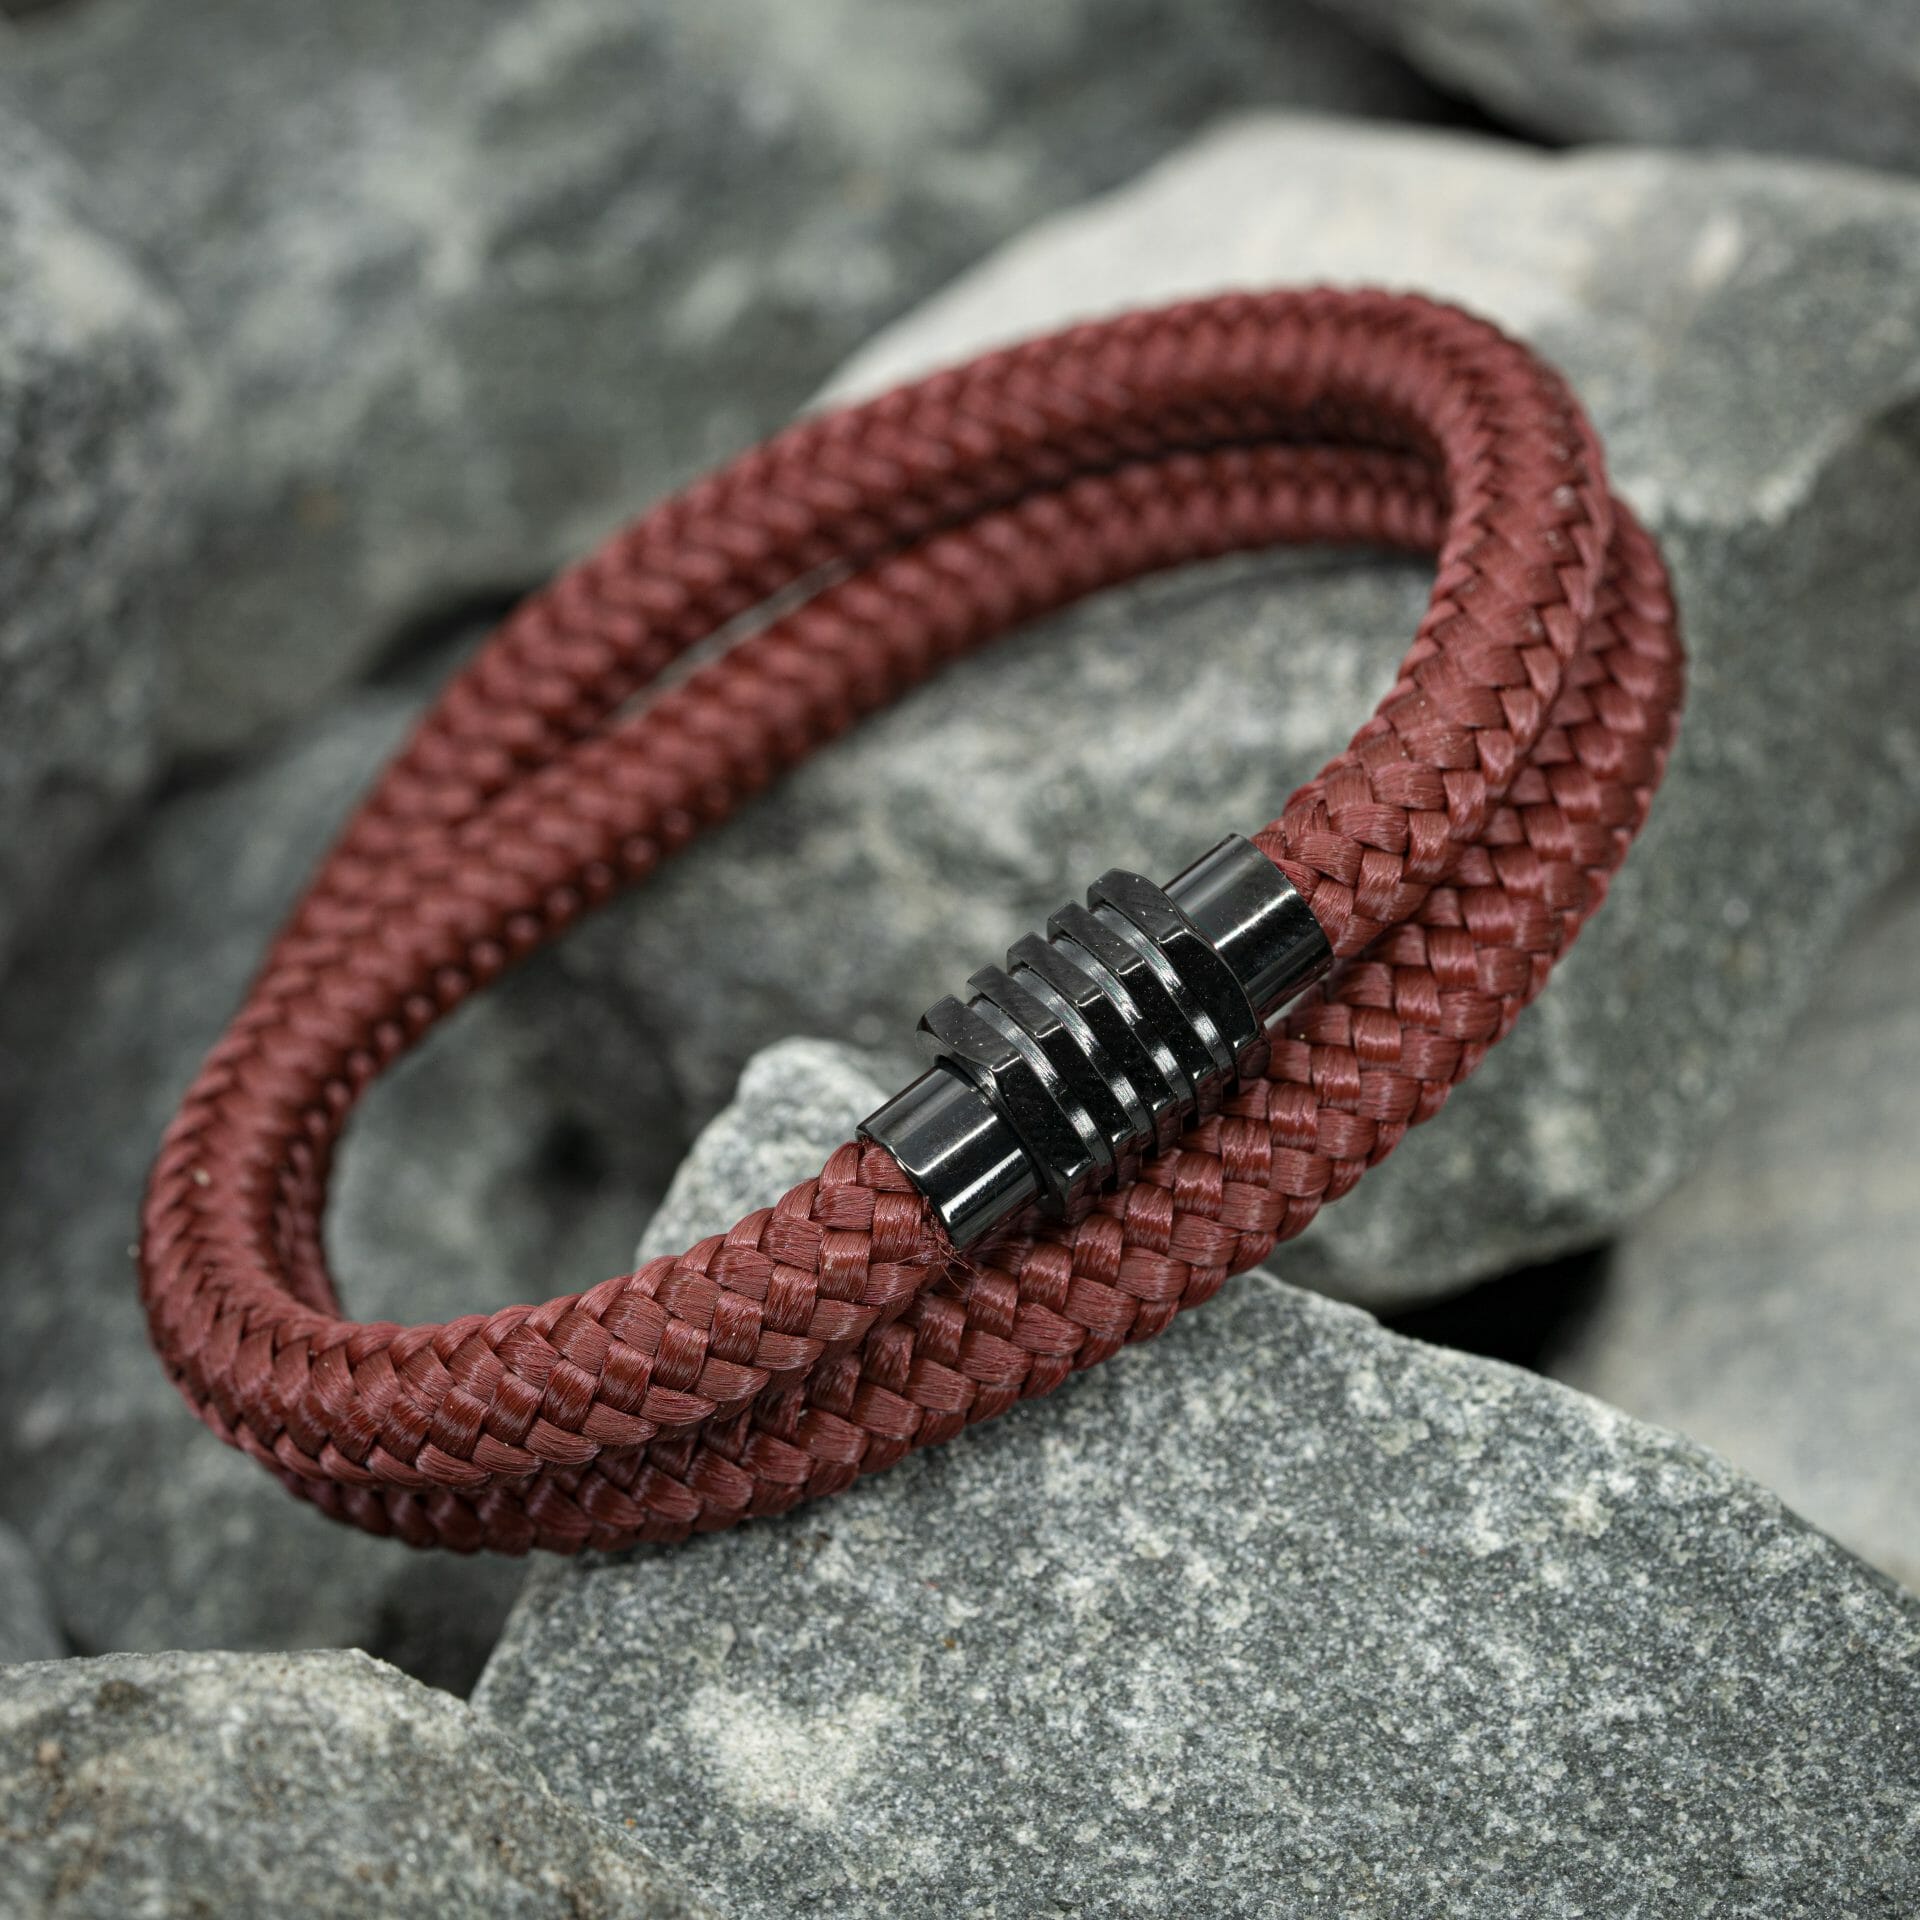 Own paracord bracelet black - Red rope